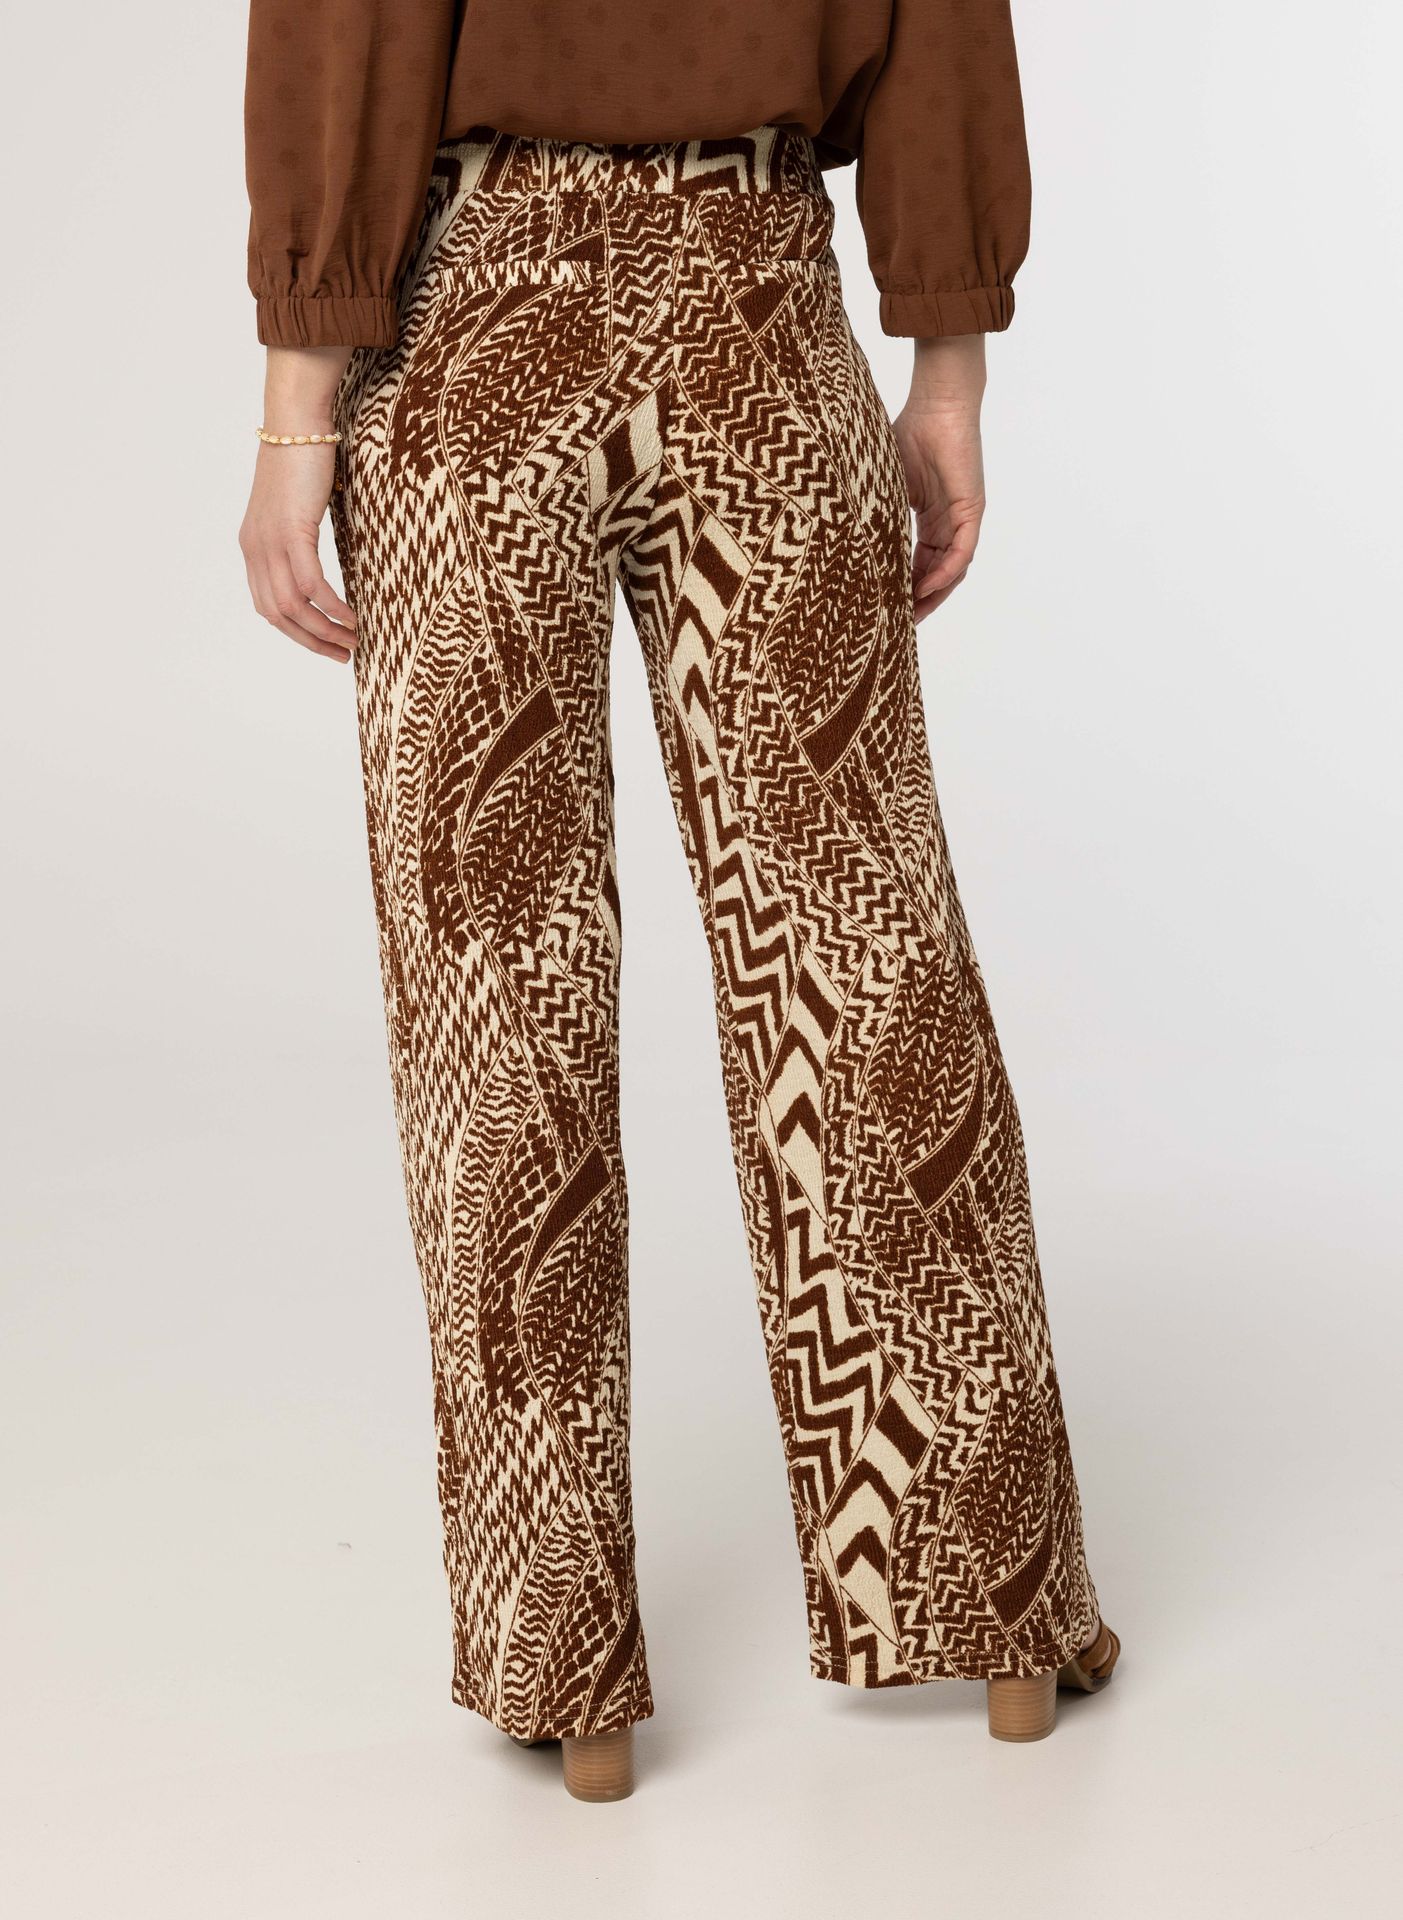 Norah Bruine pantalon met grafische print Brown/Ecru 214065-241